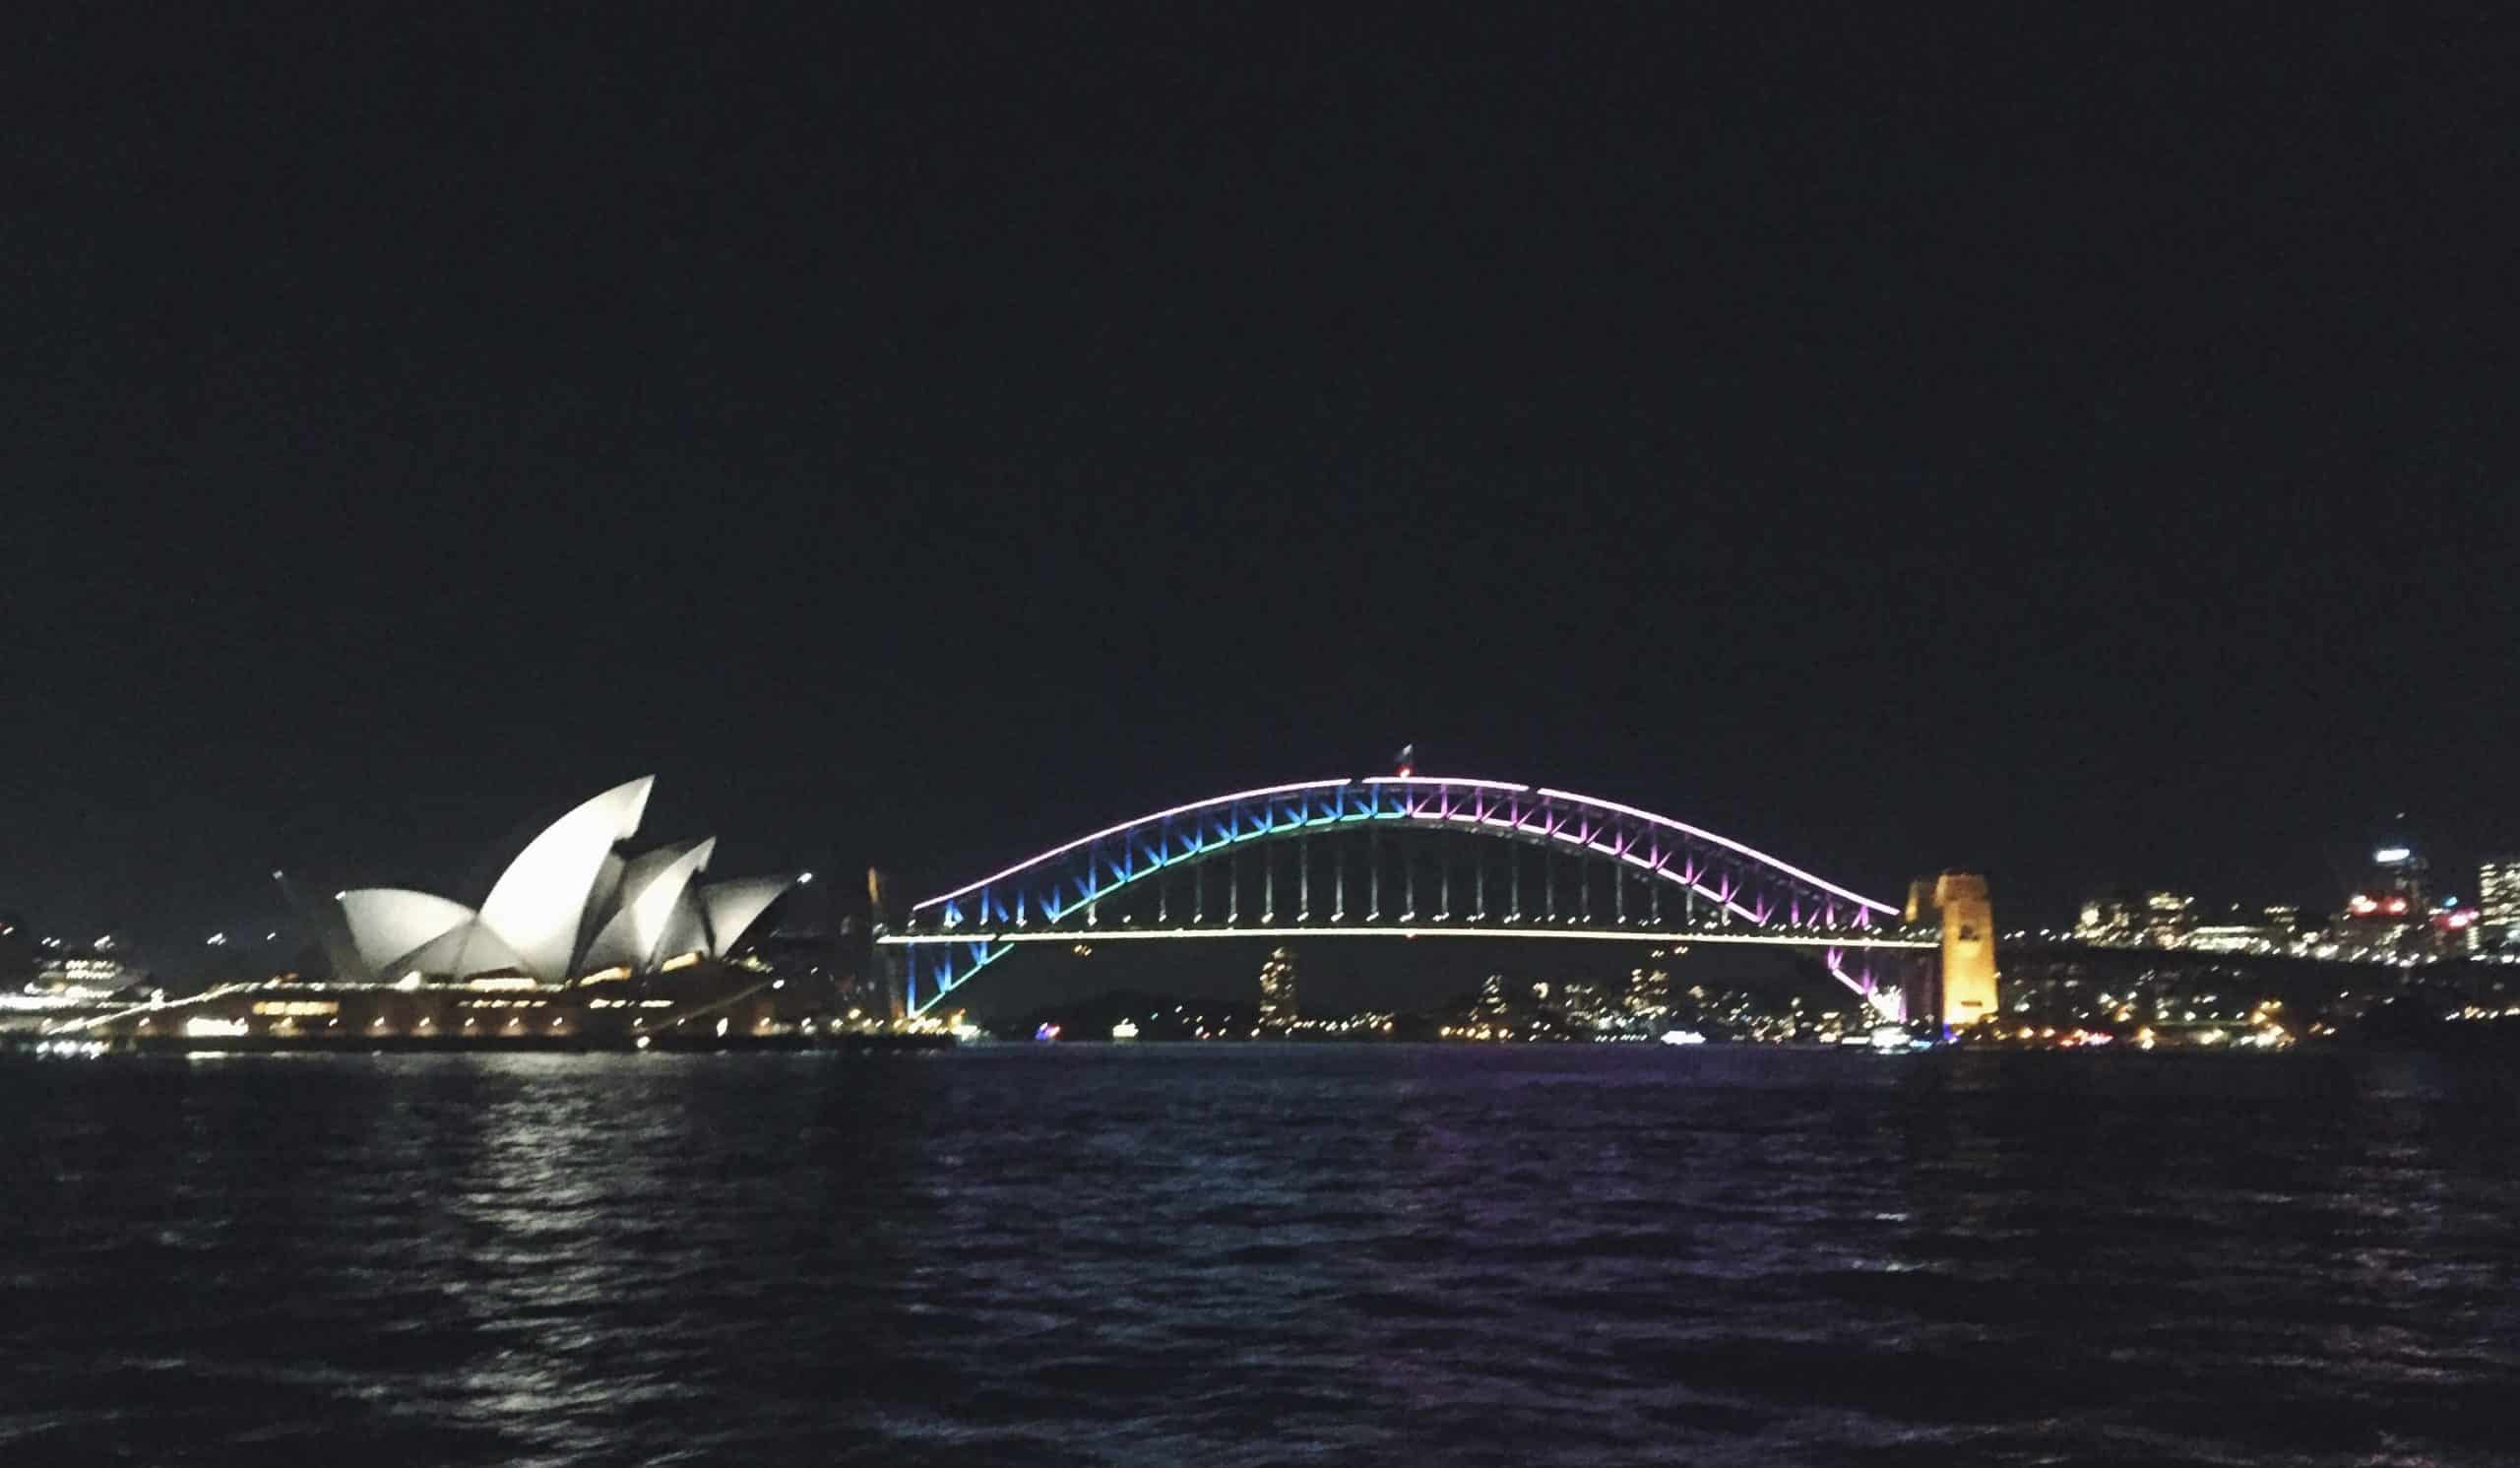 Vivid Light Sydney Australia 